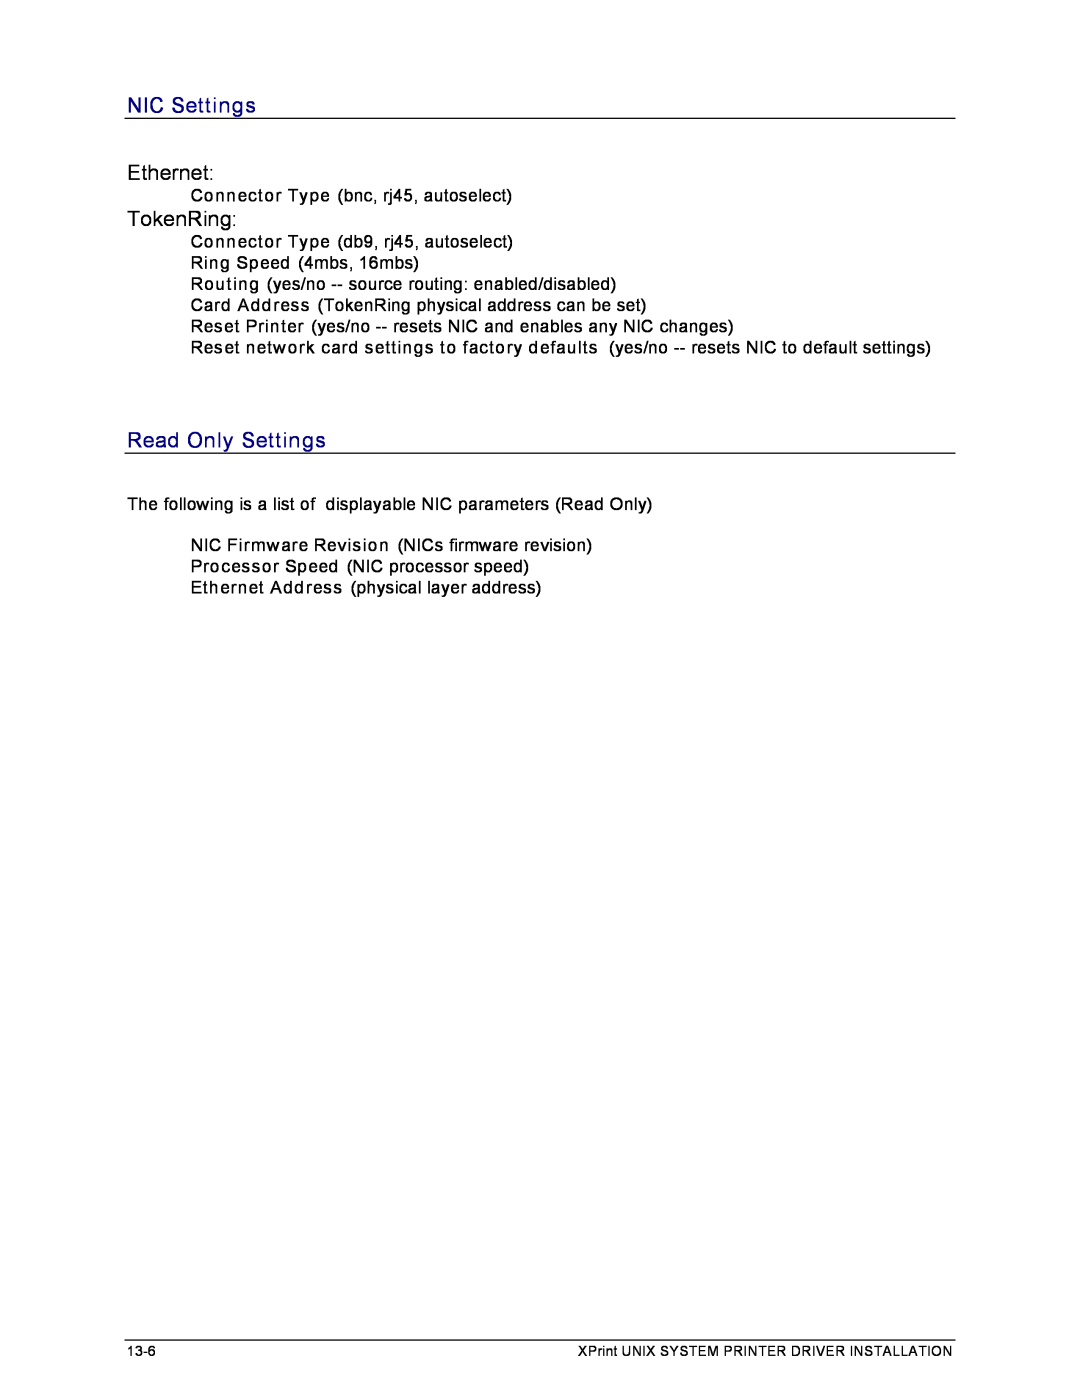 Xerox 701P91273 manual NIC Settings, Ethernet, TokenRing, Read Only Settings 